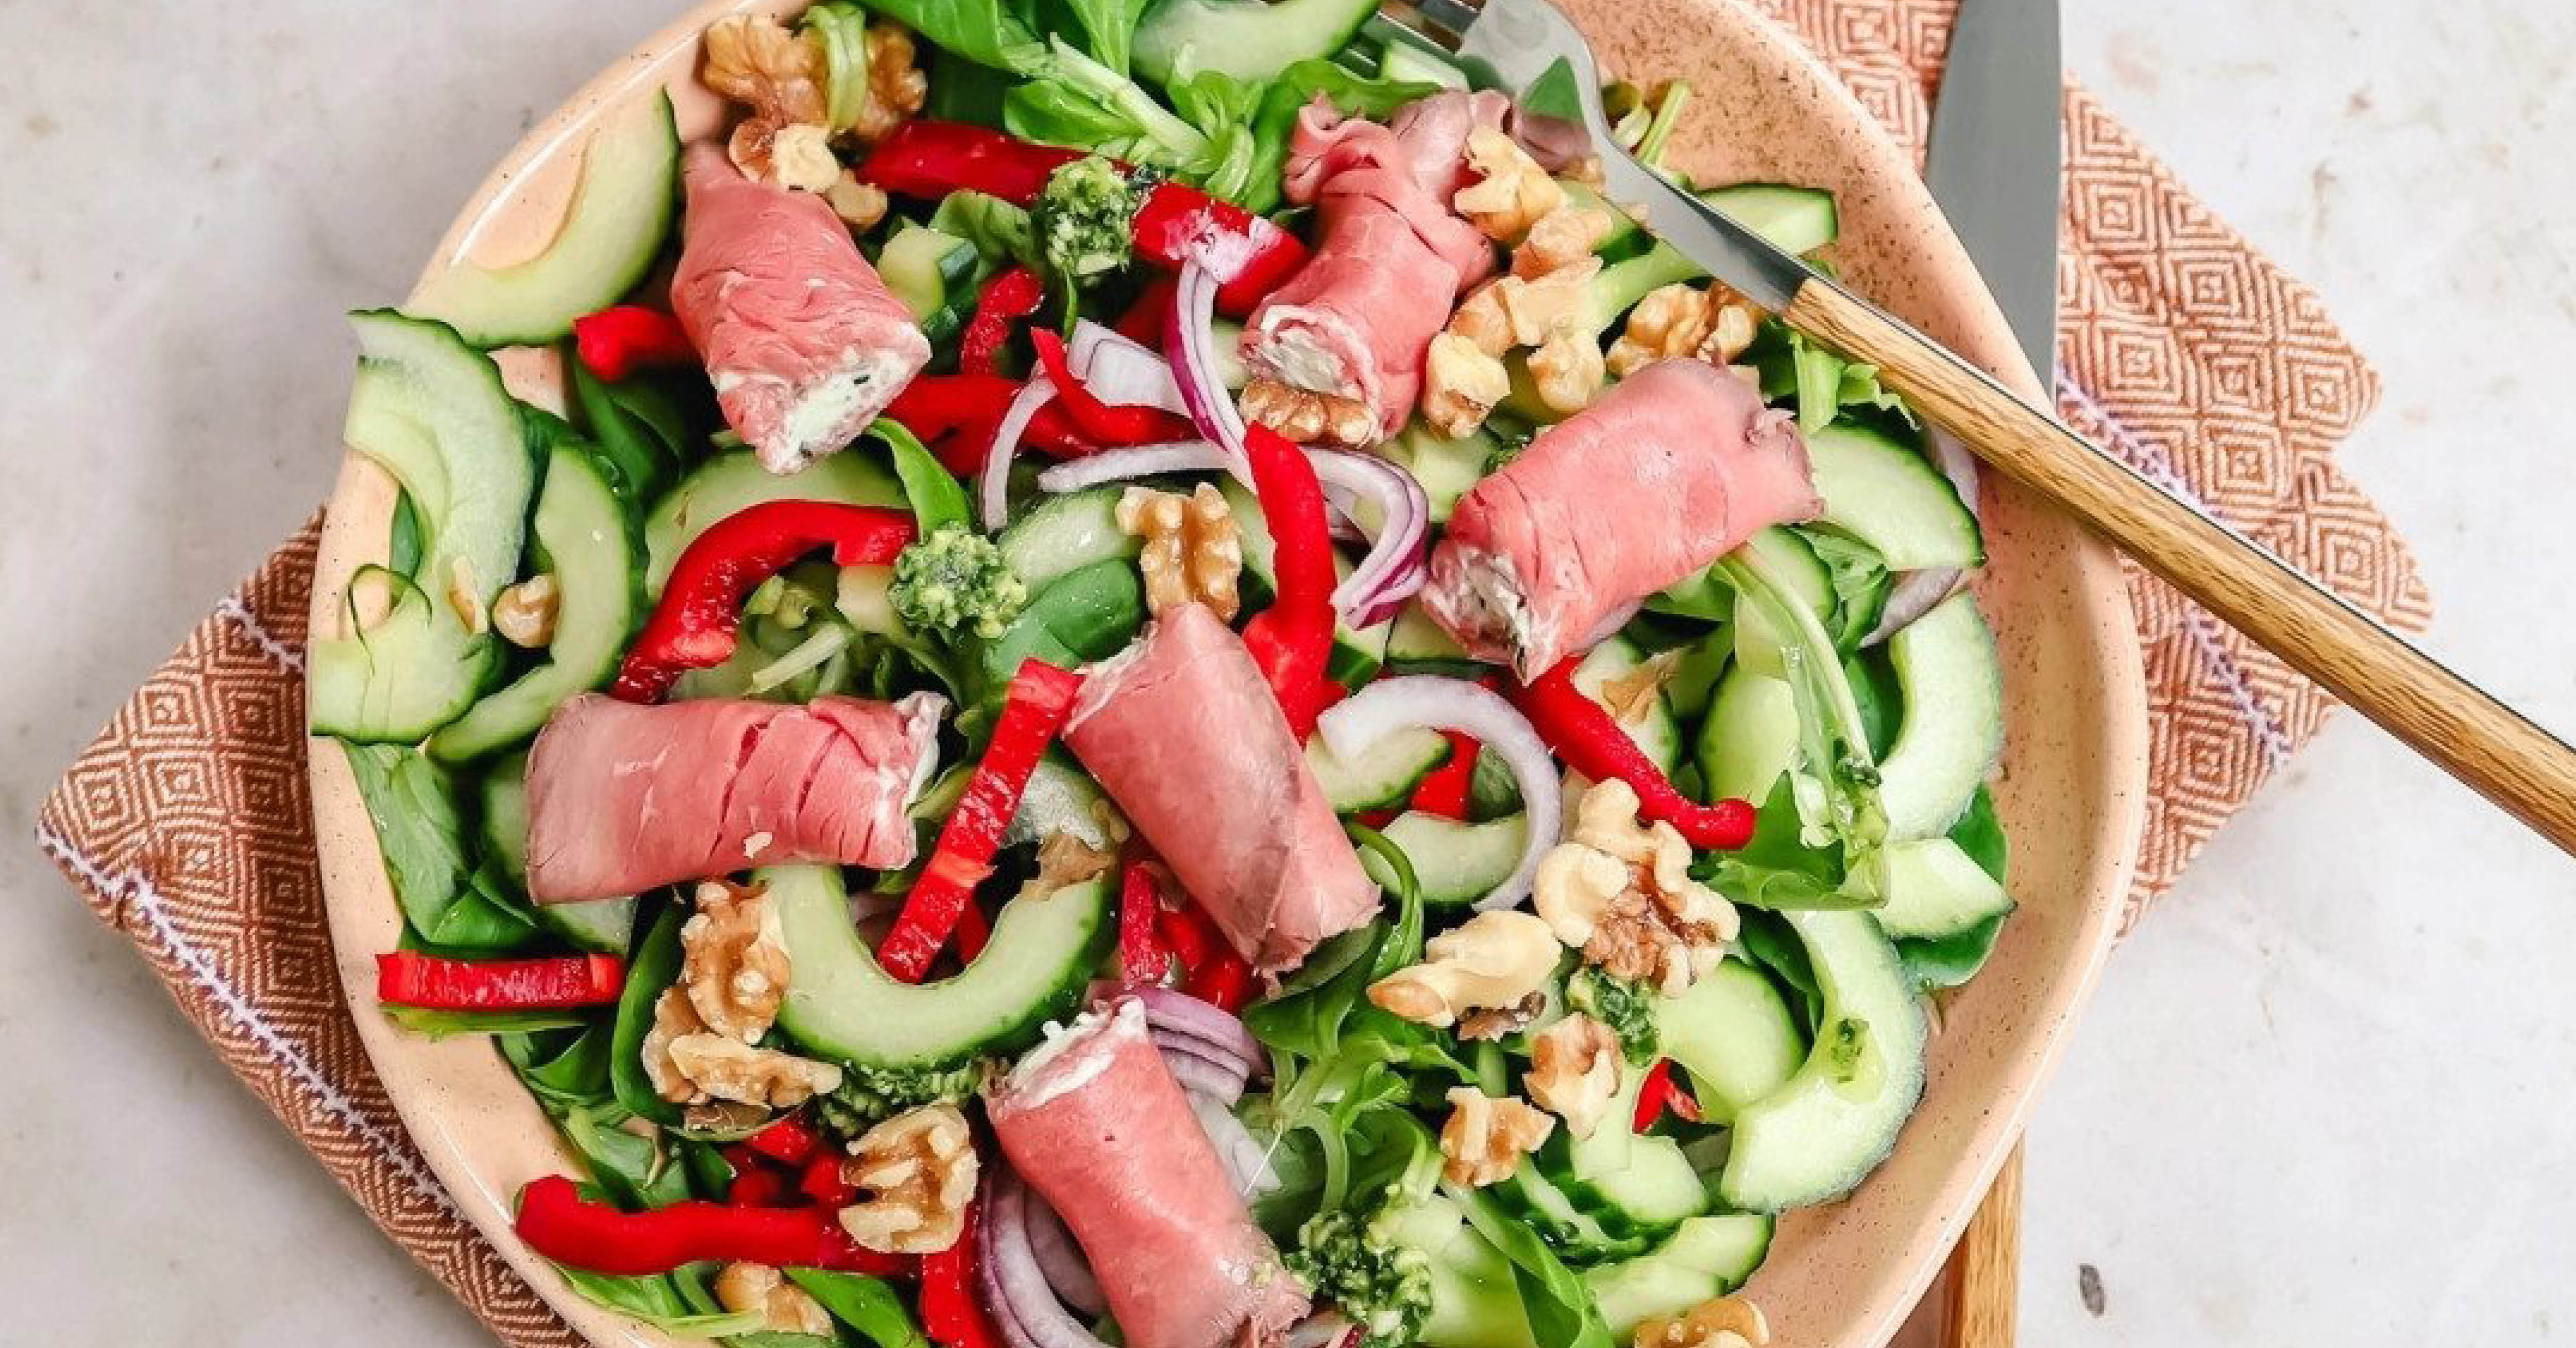 Salade met rosbiefrolletjes (423 kcal)